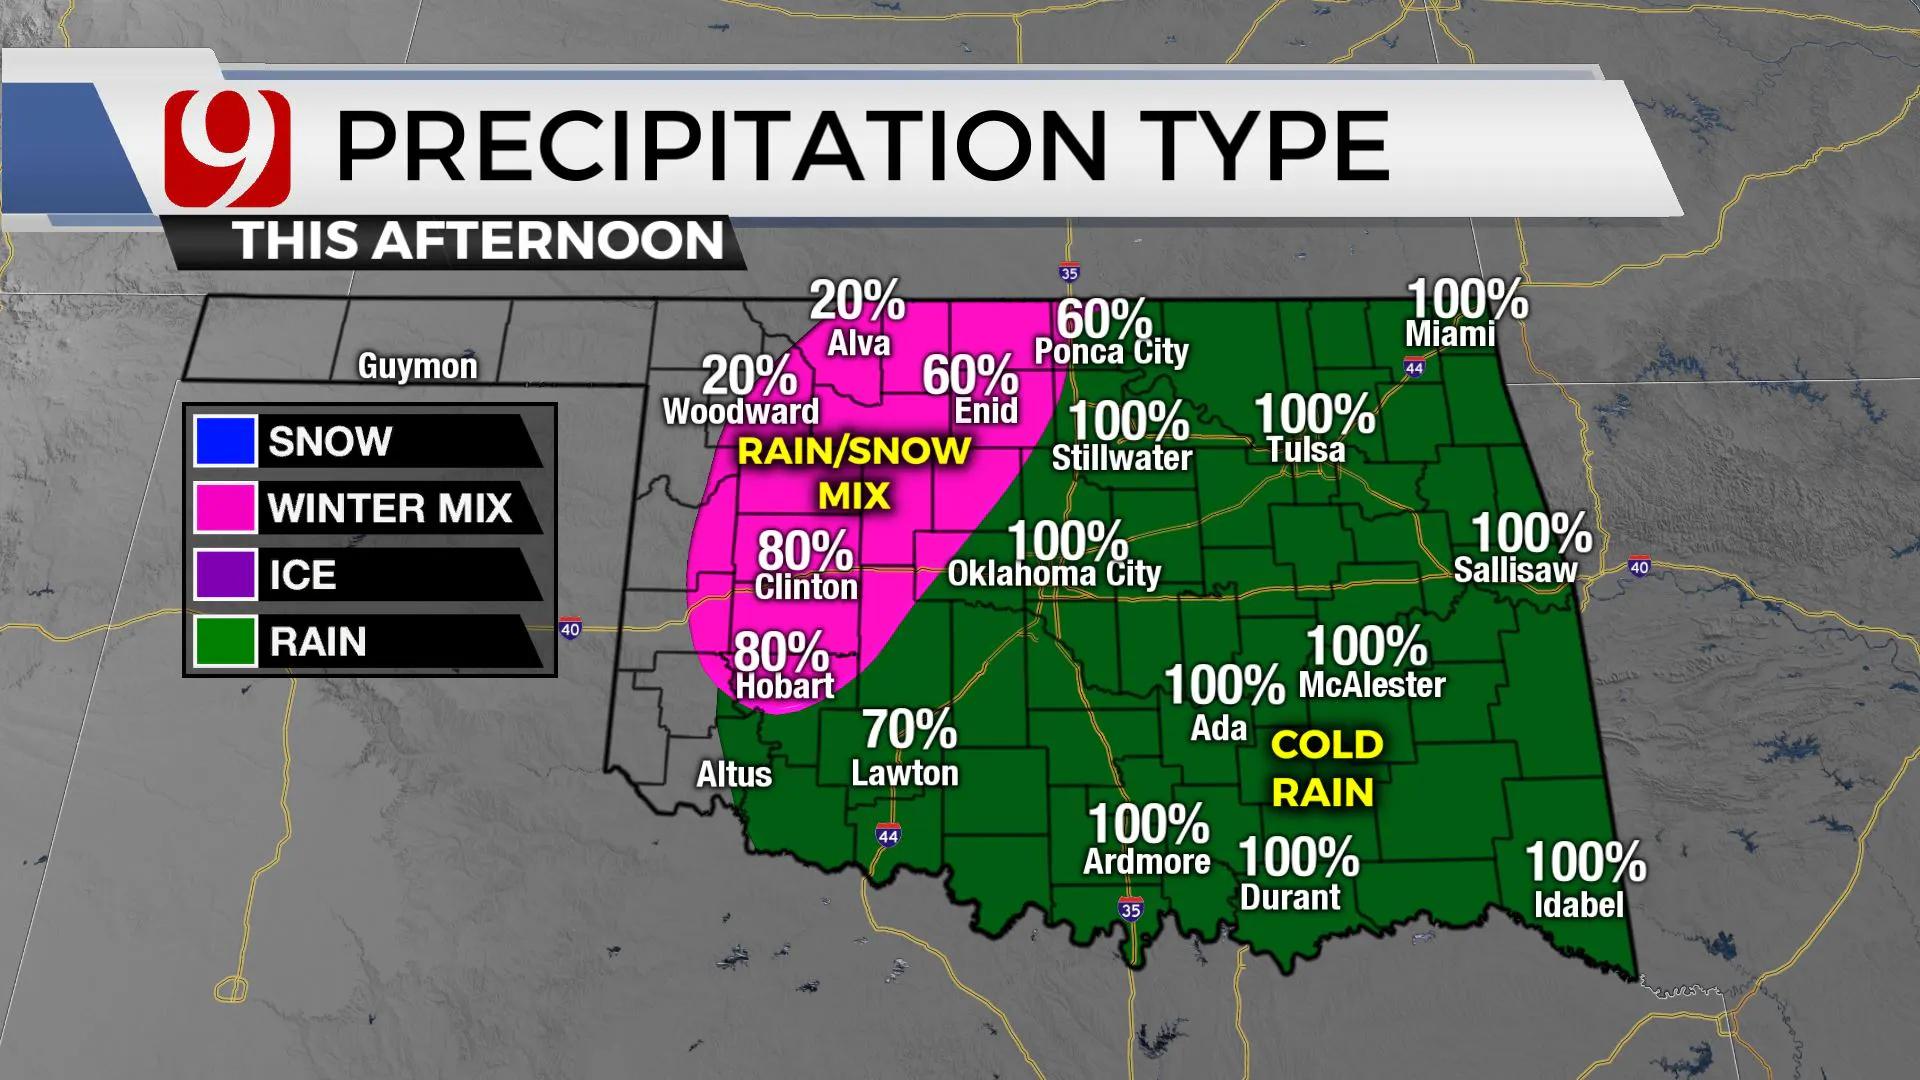 Rain types across the state.